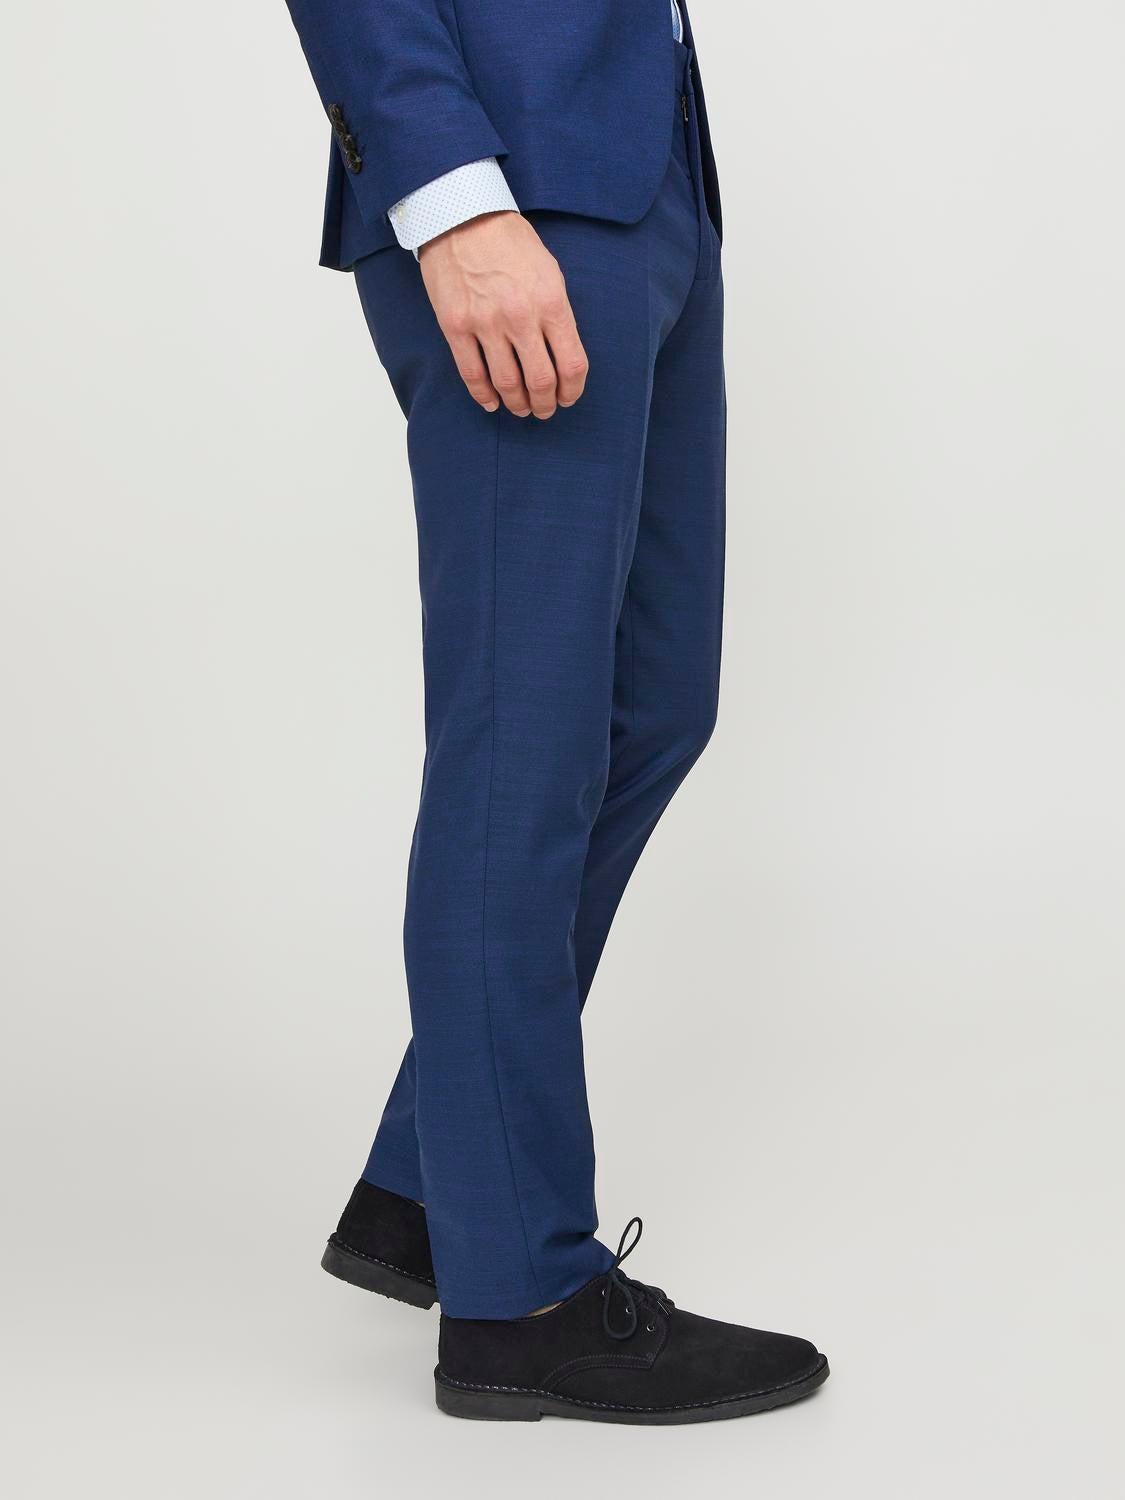 Slim Fit Navy Semi Plain Trousers | Buy Online at Moss